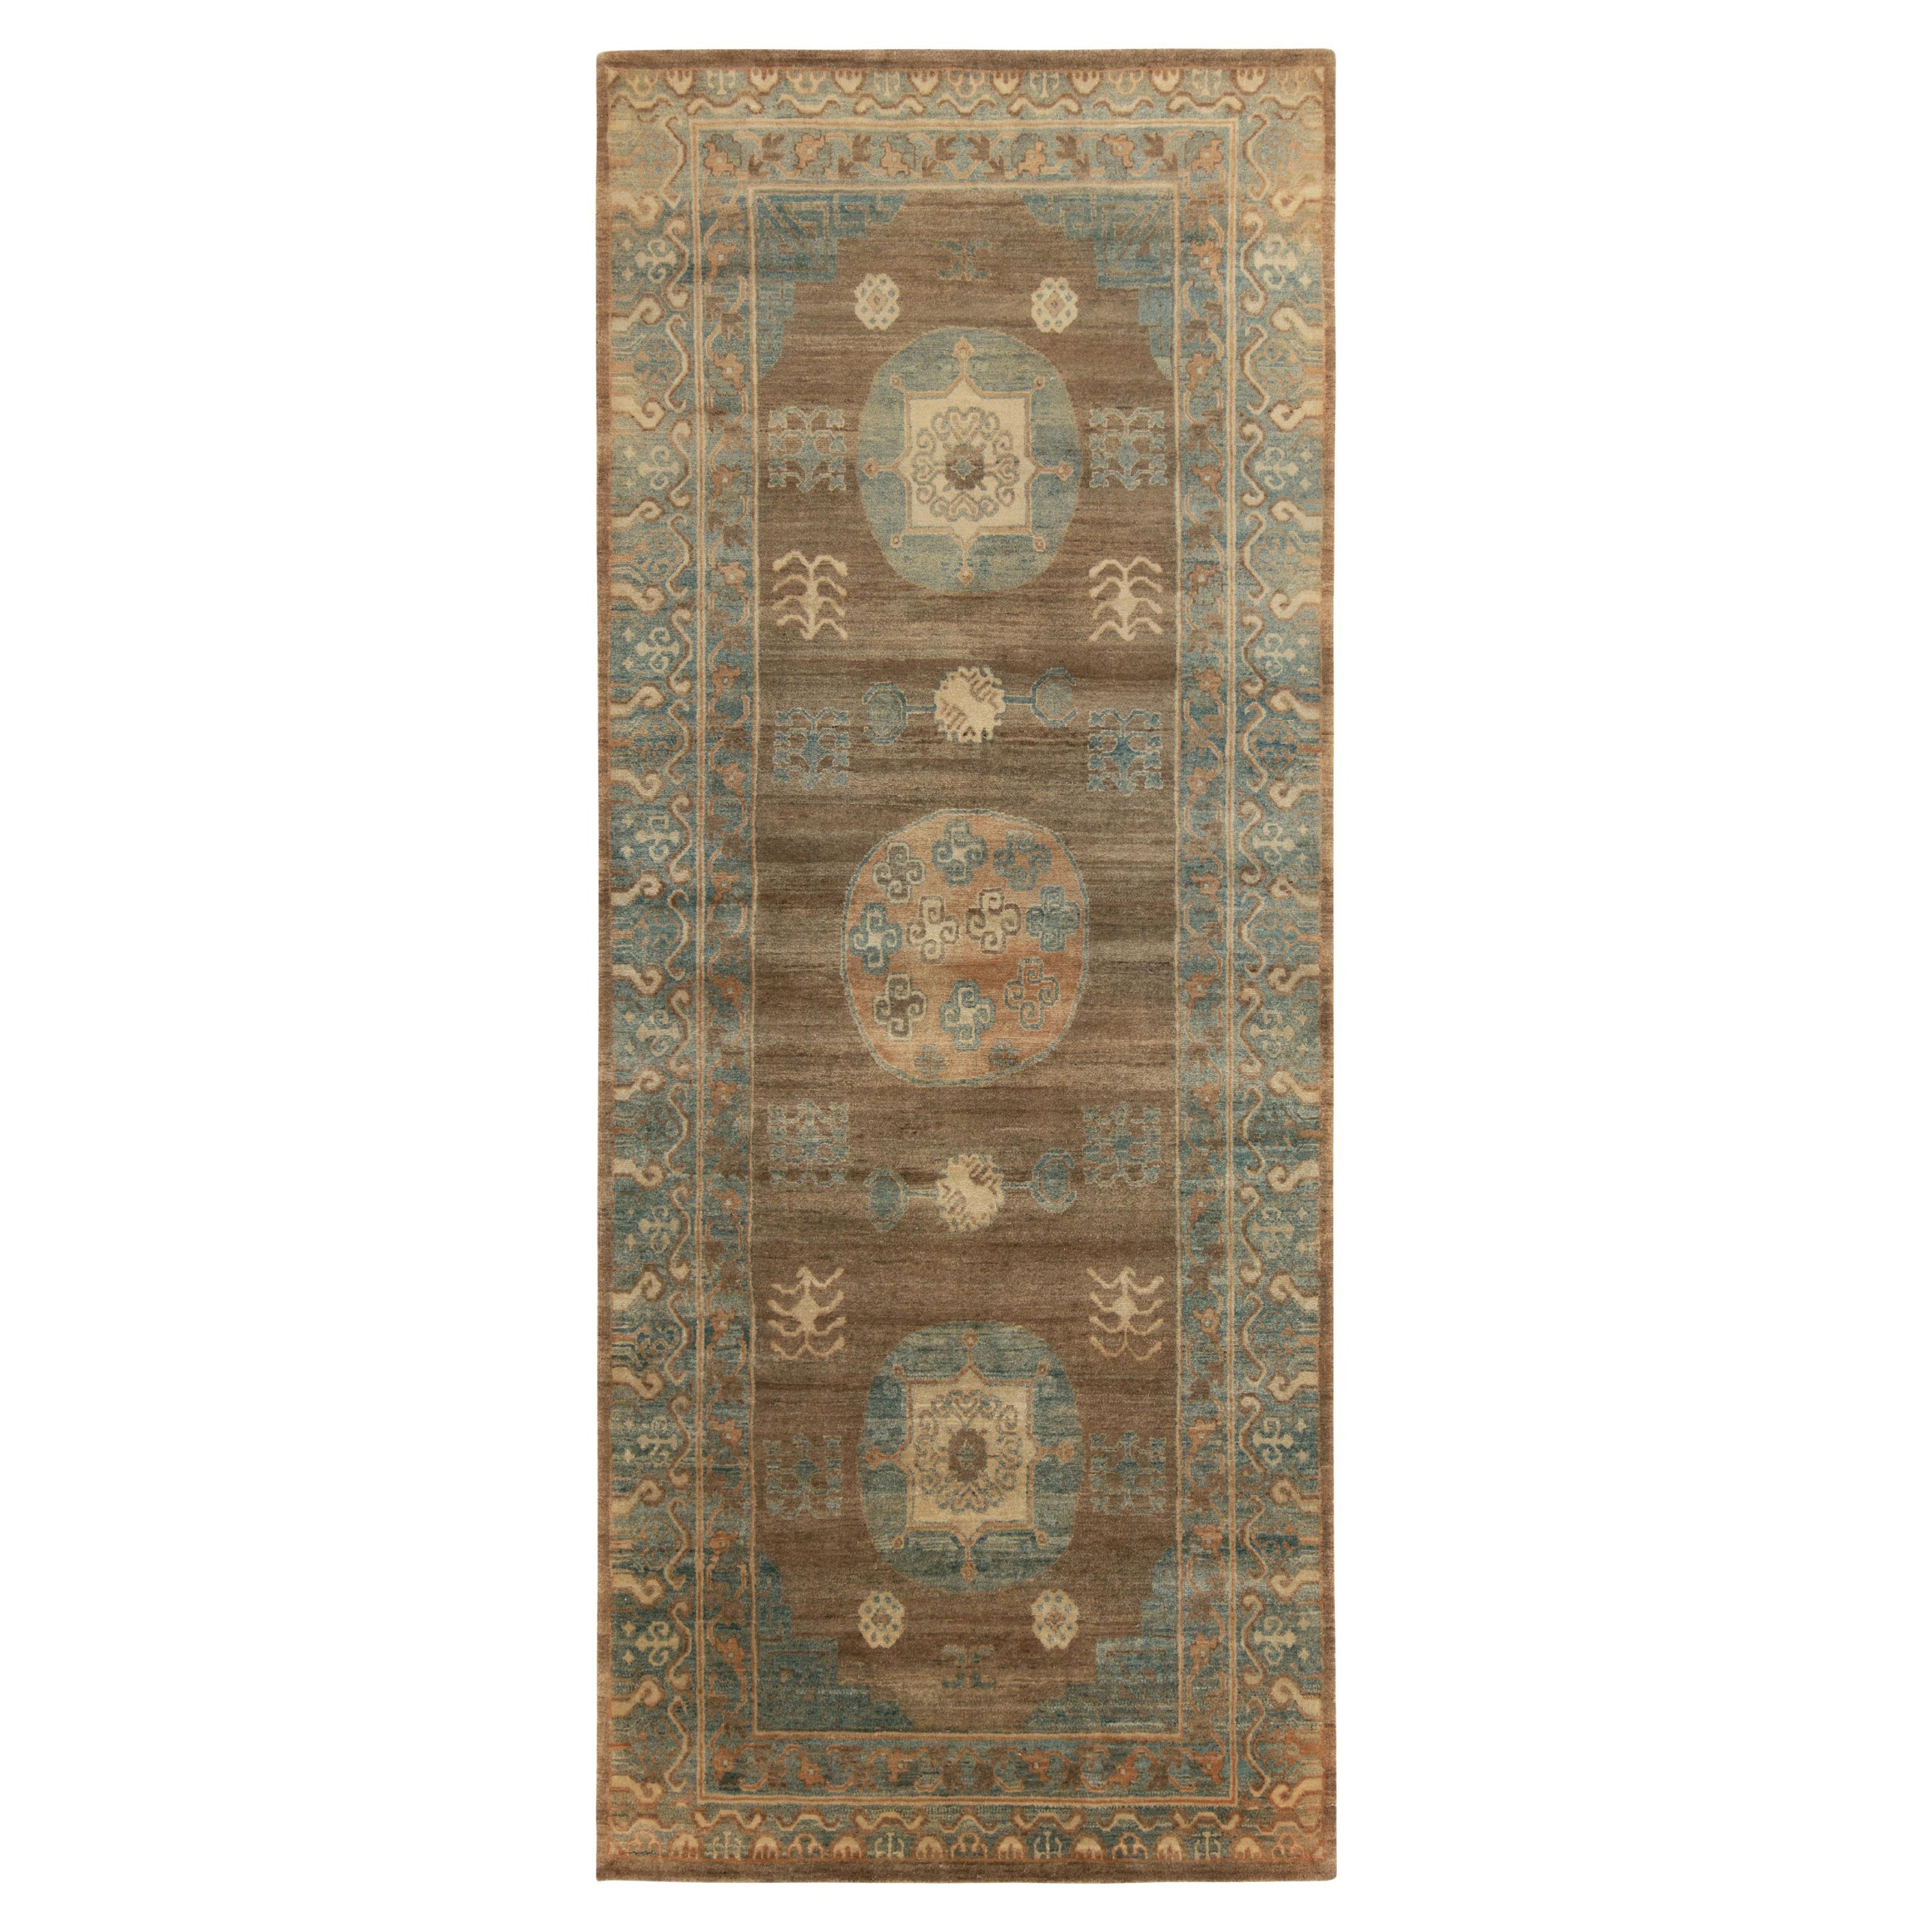 Rug & Kilim’s Khotan Samarkand Style Rug in Beige-Brown and Blue Medallion Style For Sale